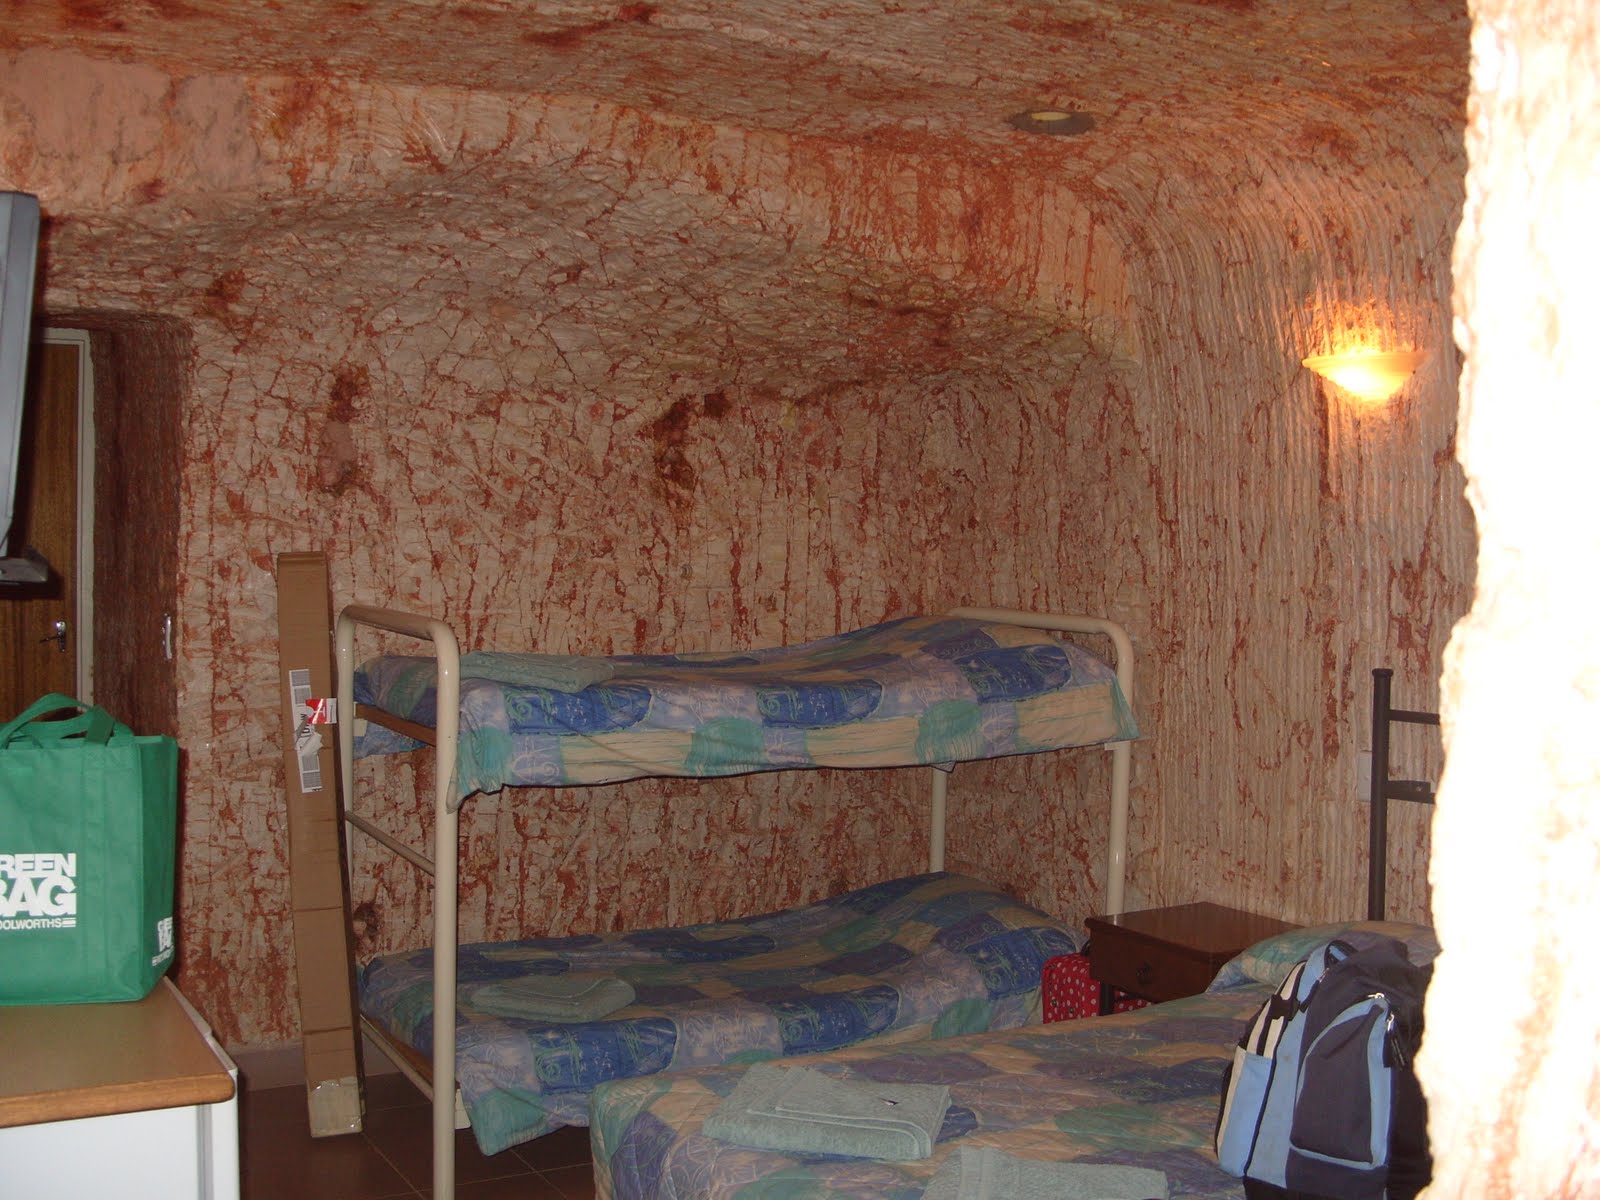 Our underground motel room.